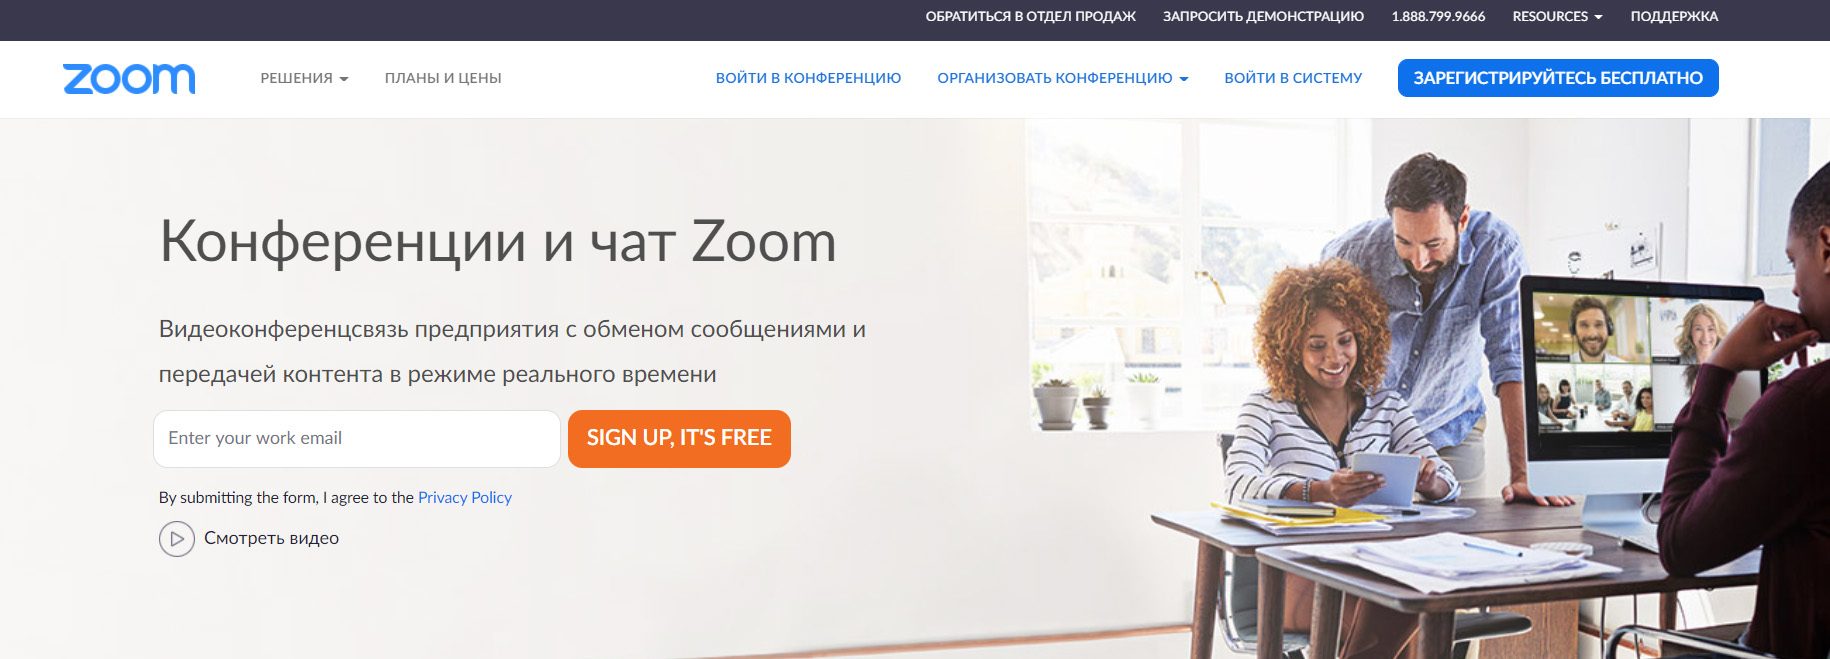 Топ сервисов для организации онлайн-конференций: Zoom